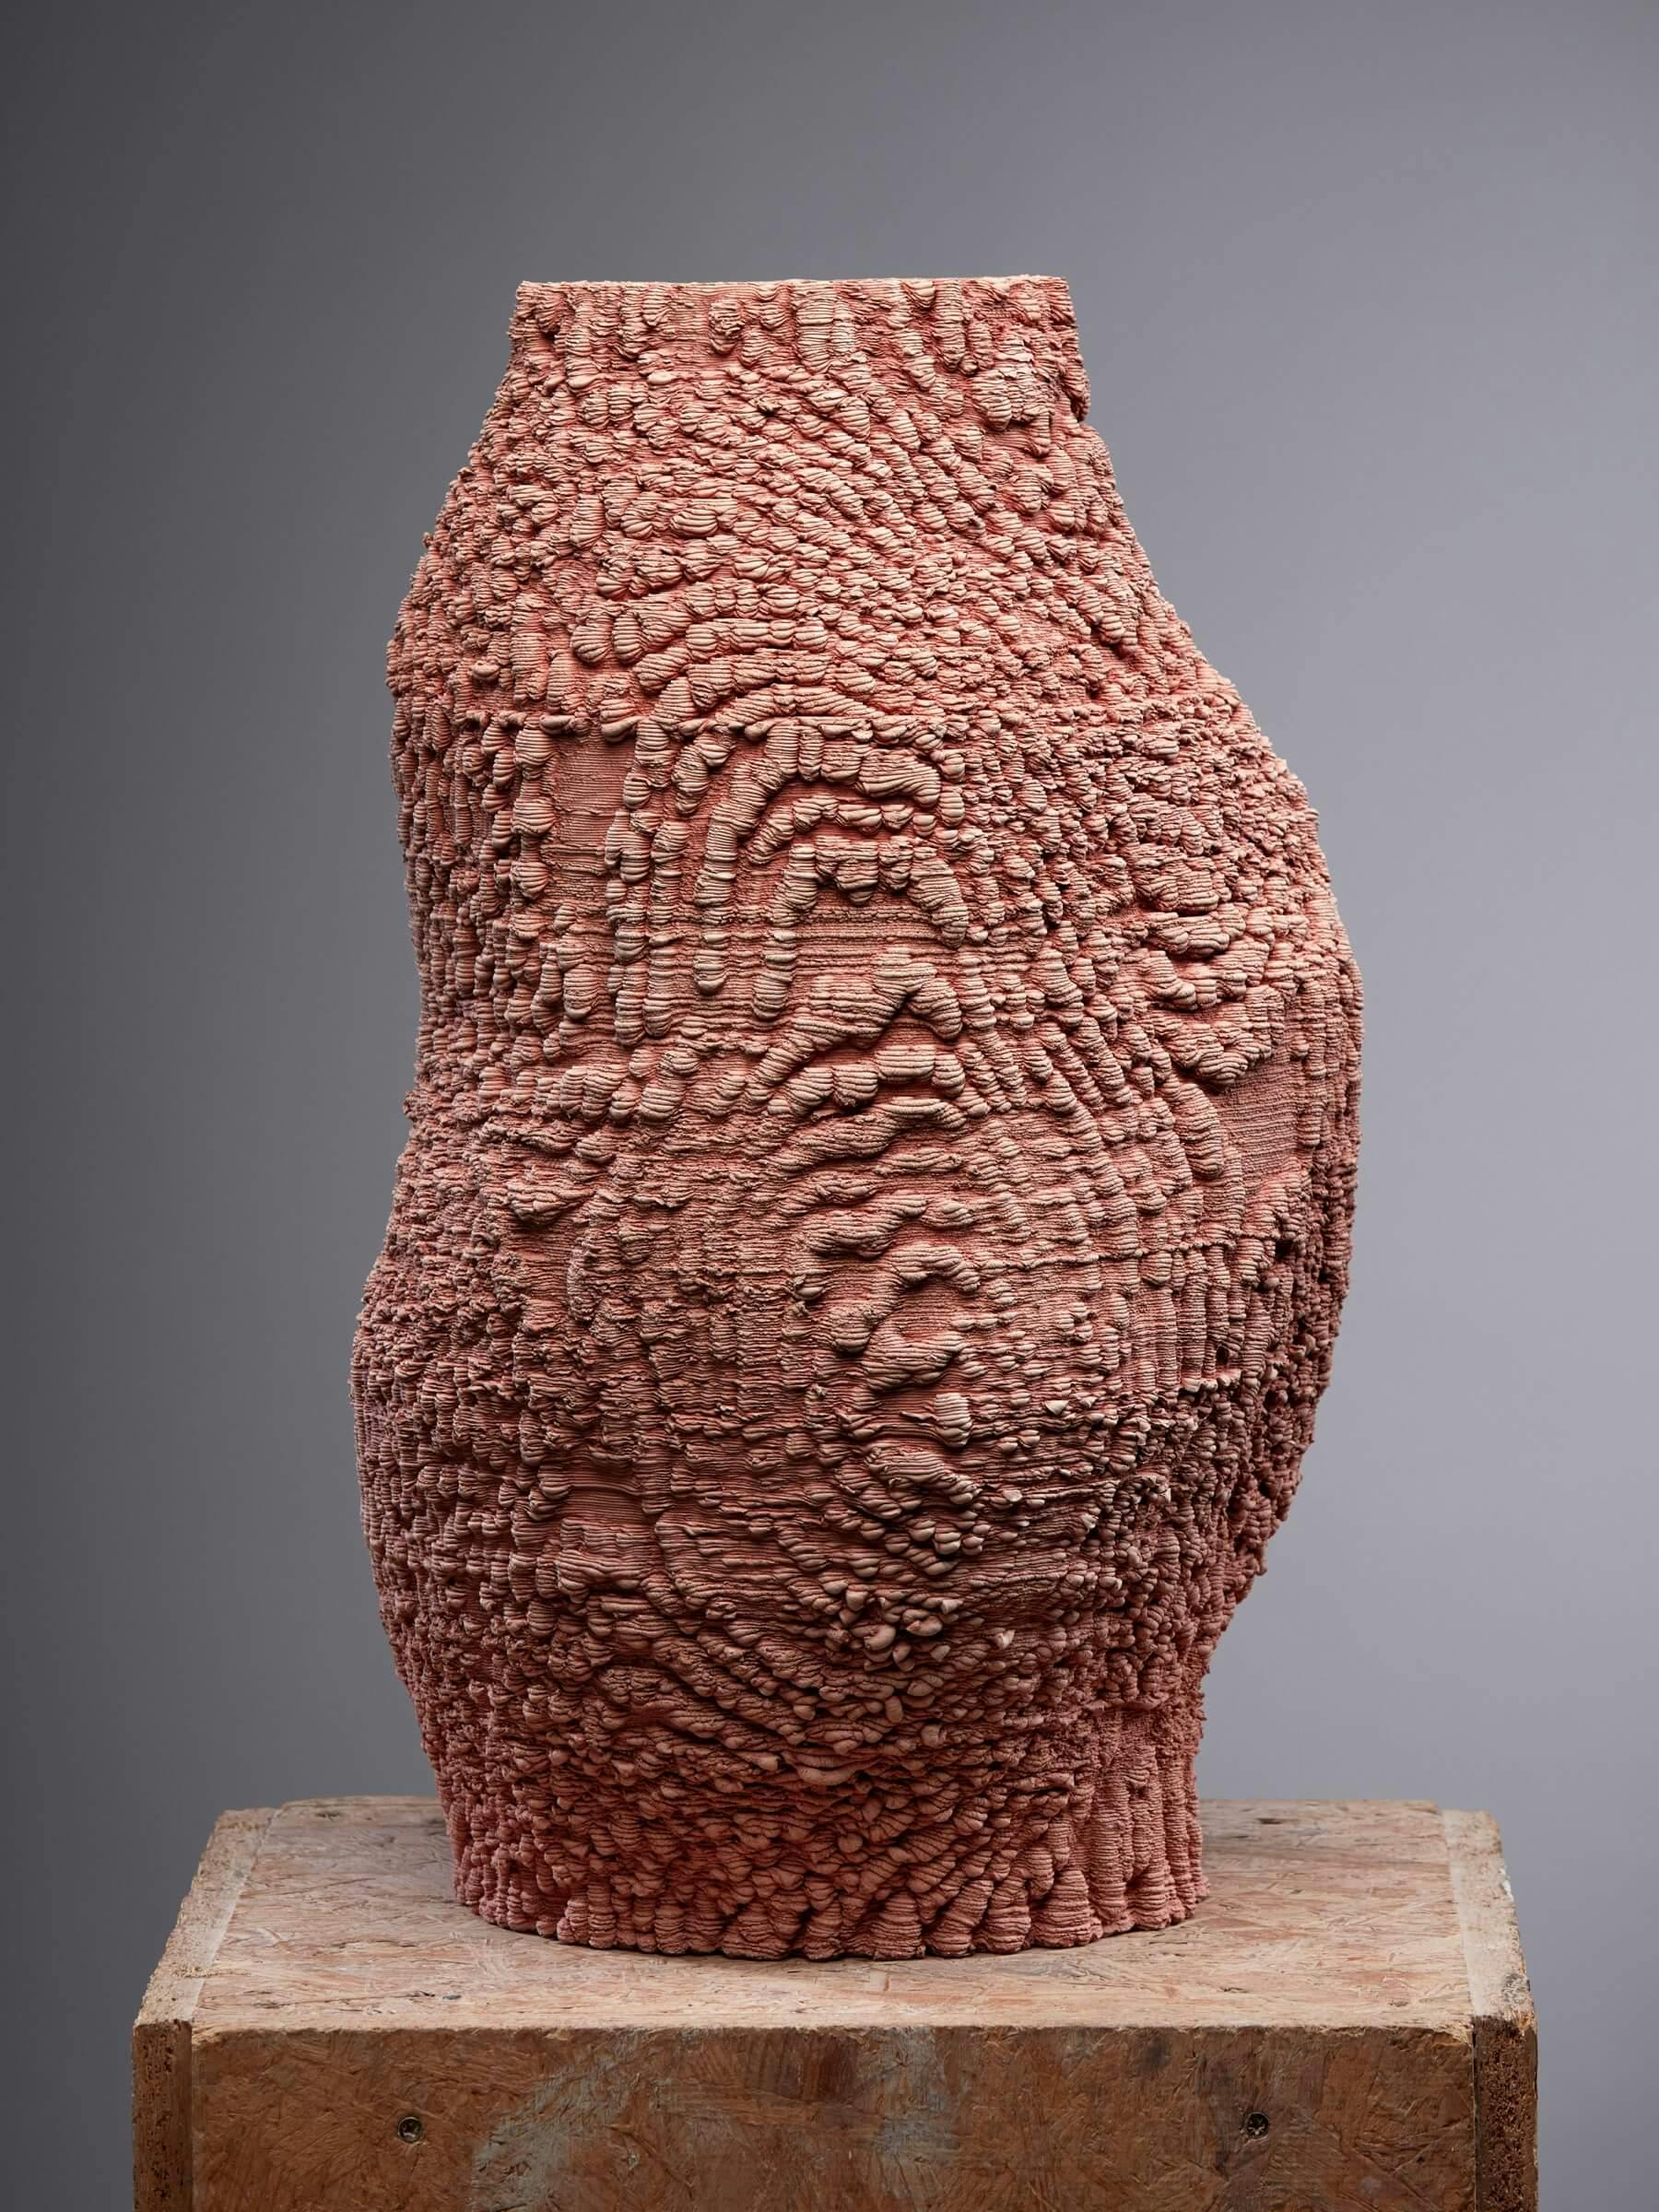 Olivier van Herpt: Functional 3D Printed Ceramics. 